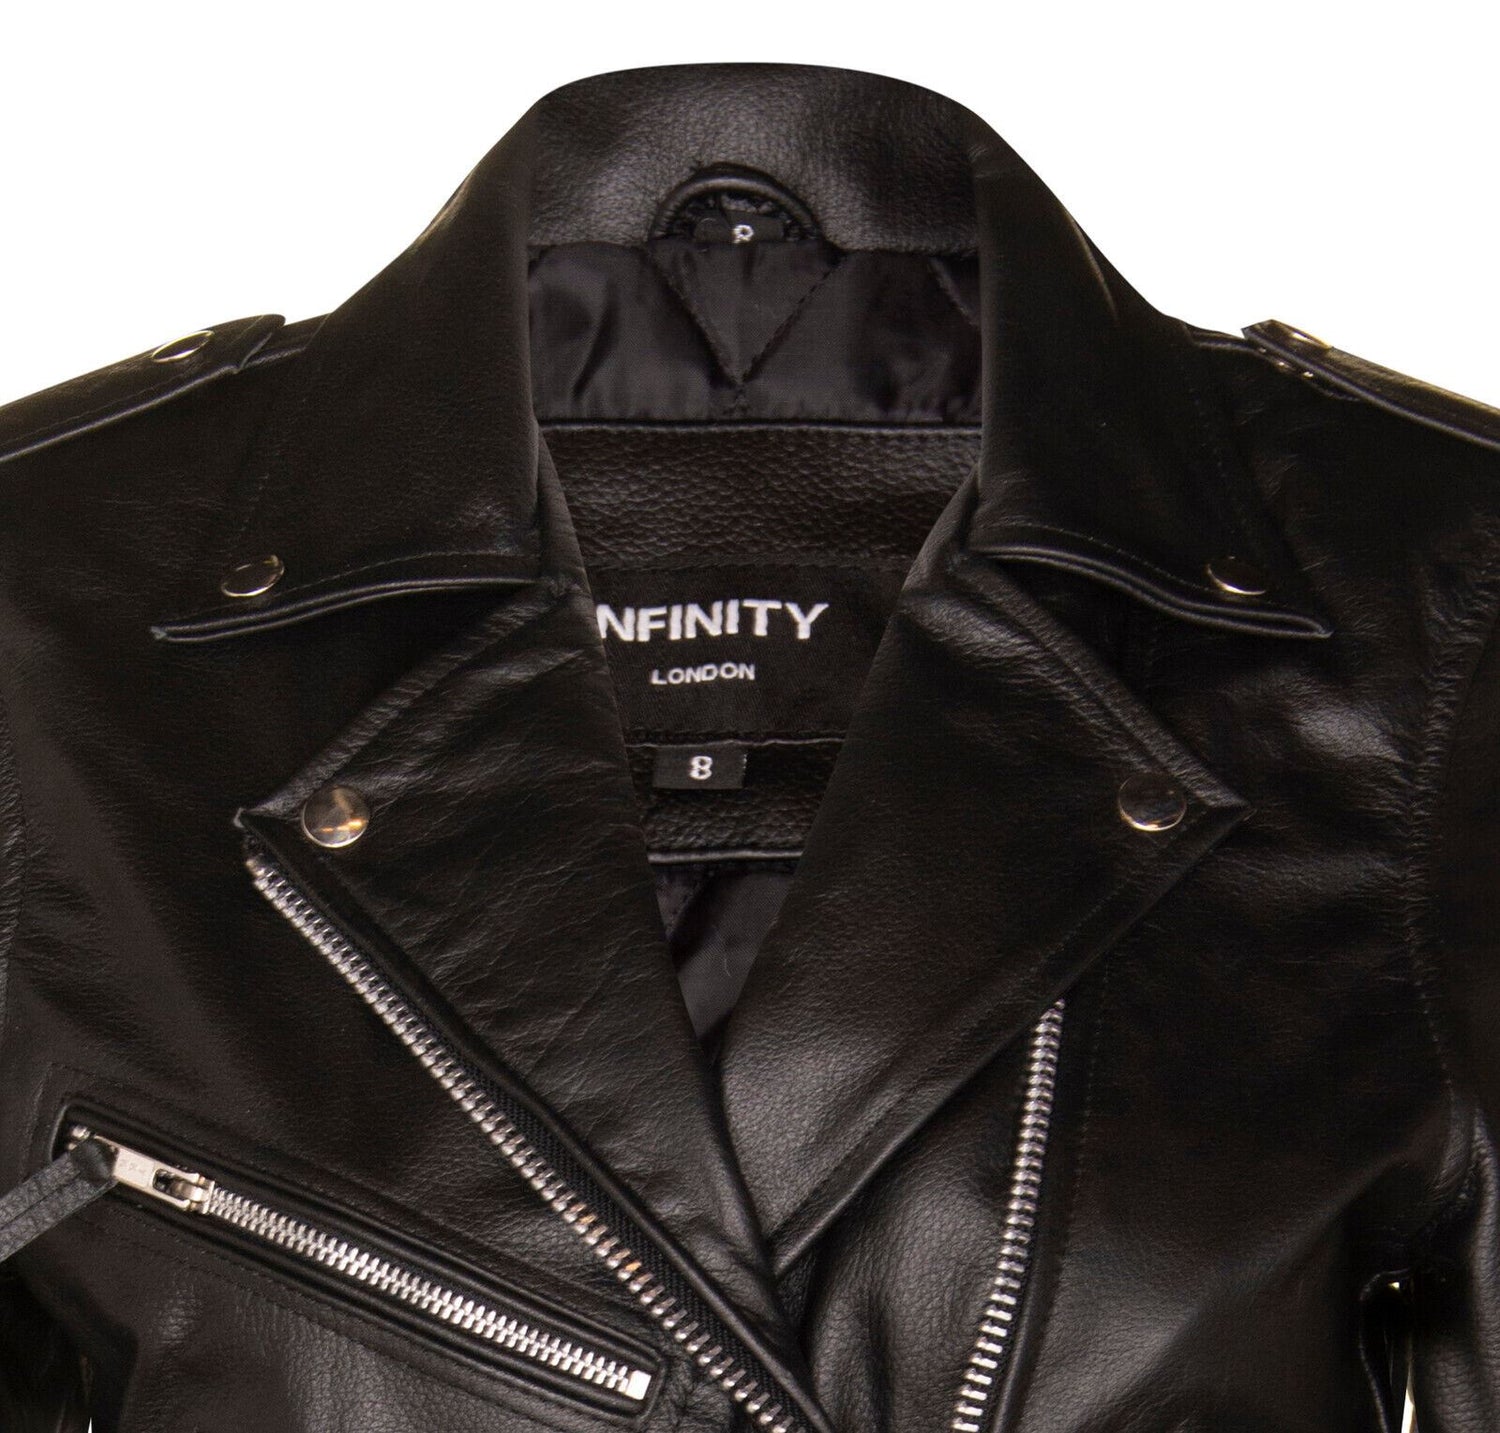 Womens FRINGE Brando Cow Hide Leather Biker Jacket-Mossley - Upperclass Fashions 